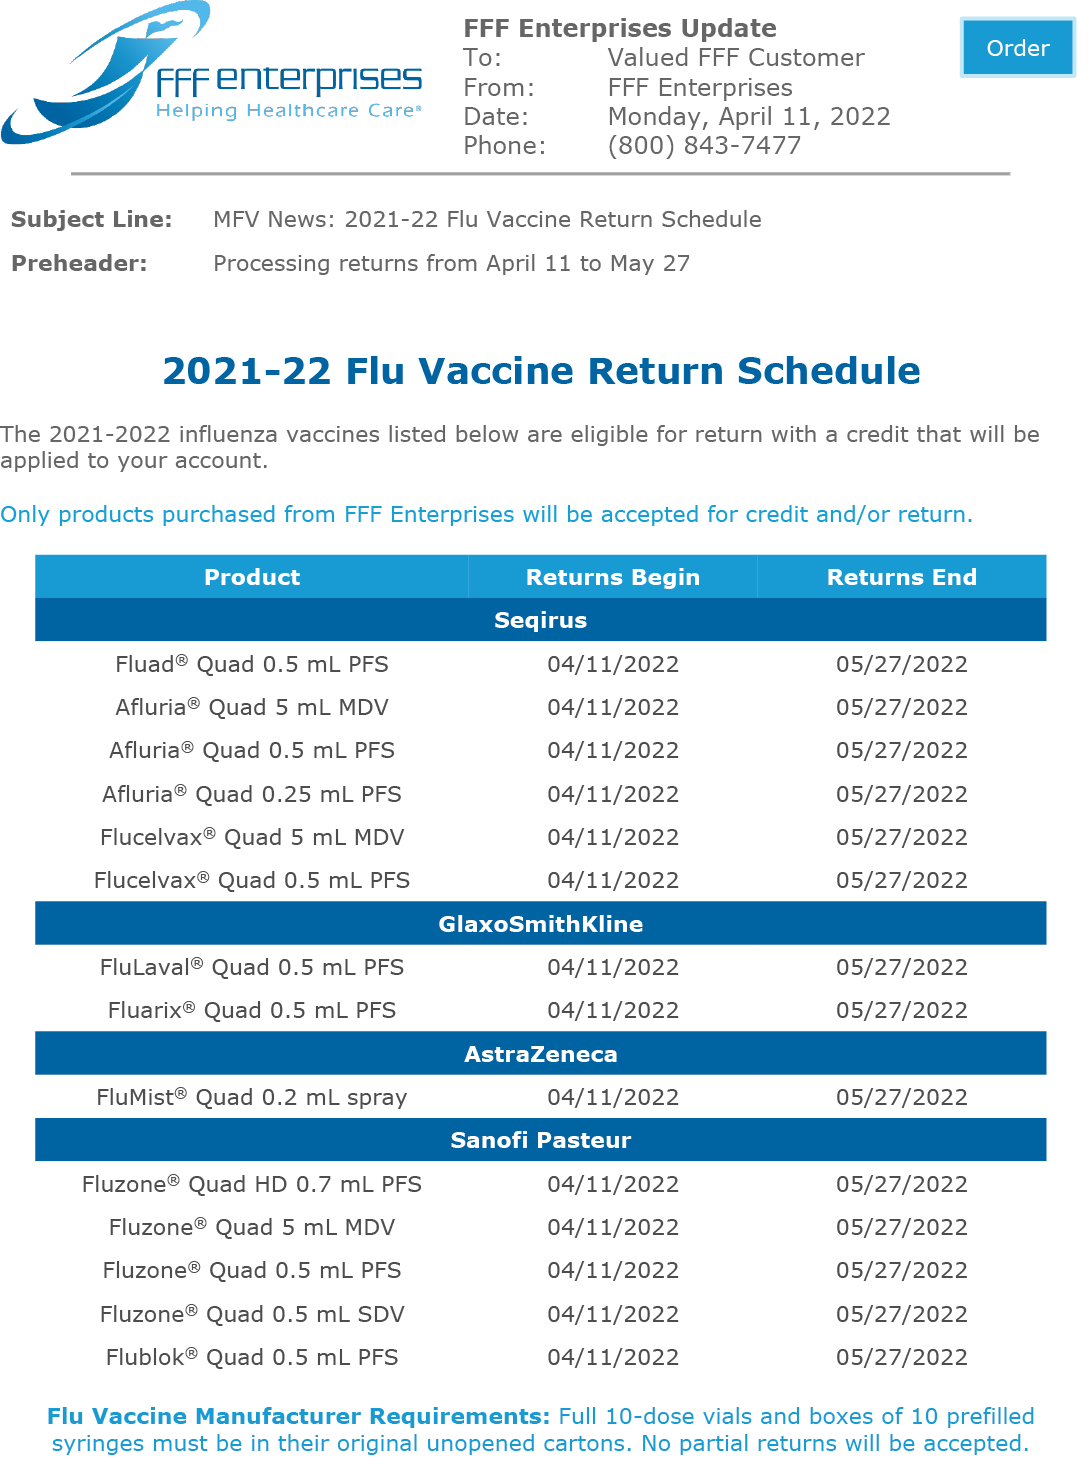 FFF Enterprises flu vaccine returns information